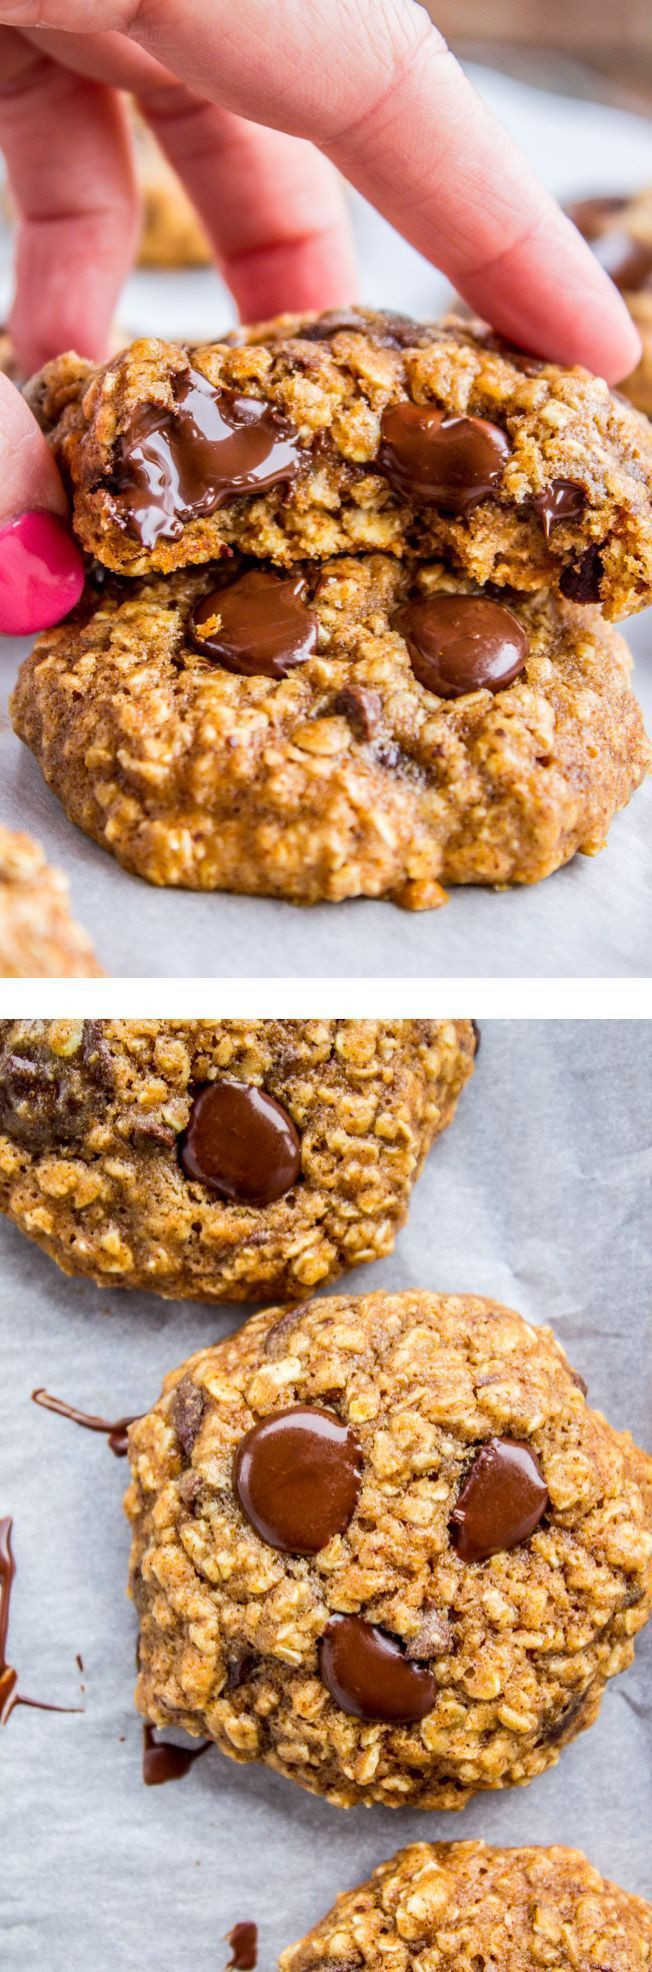 Healthy Sugar Cookies
 15 best ideas about Healthy Cookies on Pinterest